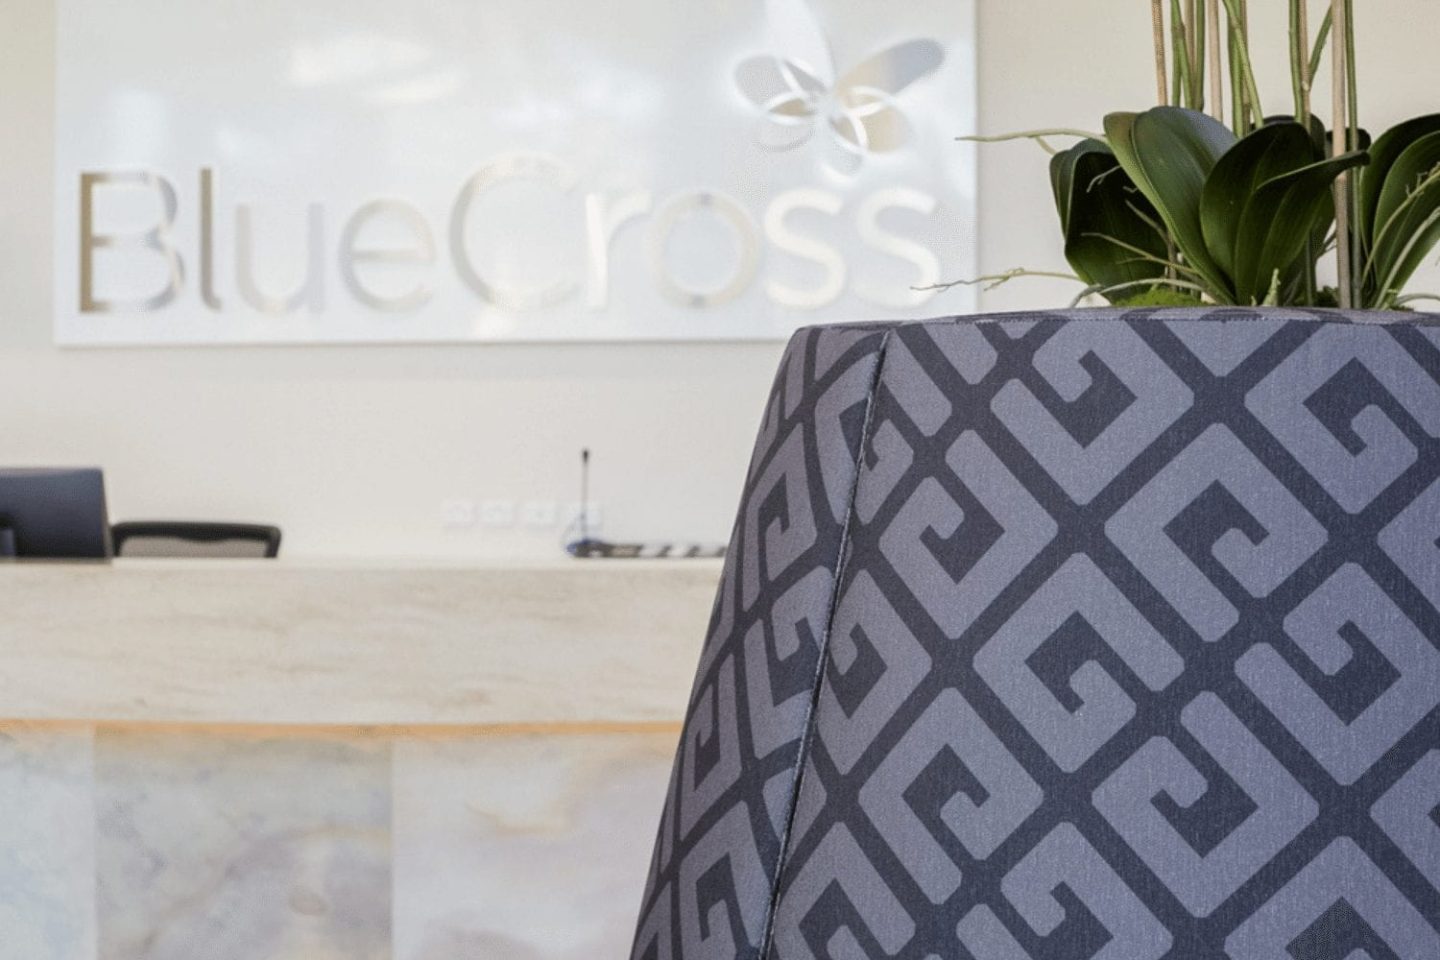 BlueCross Aged Care Design